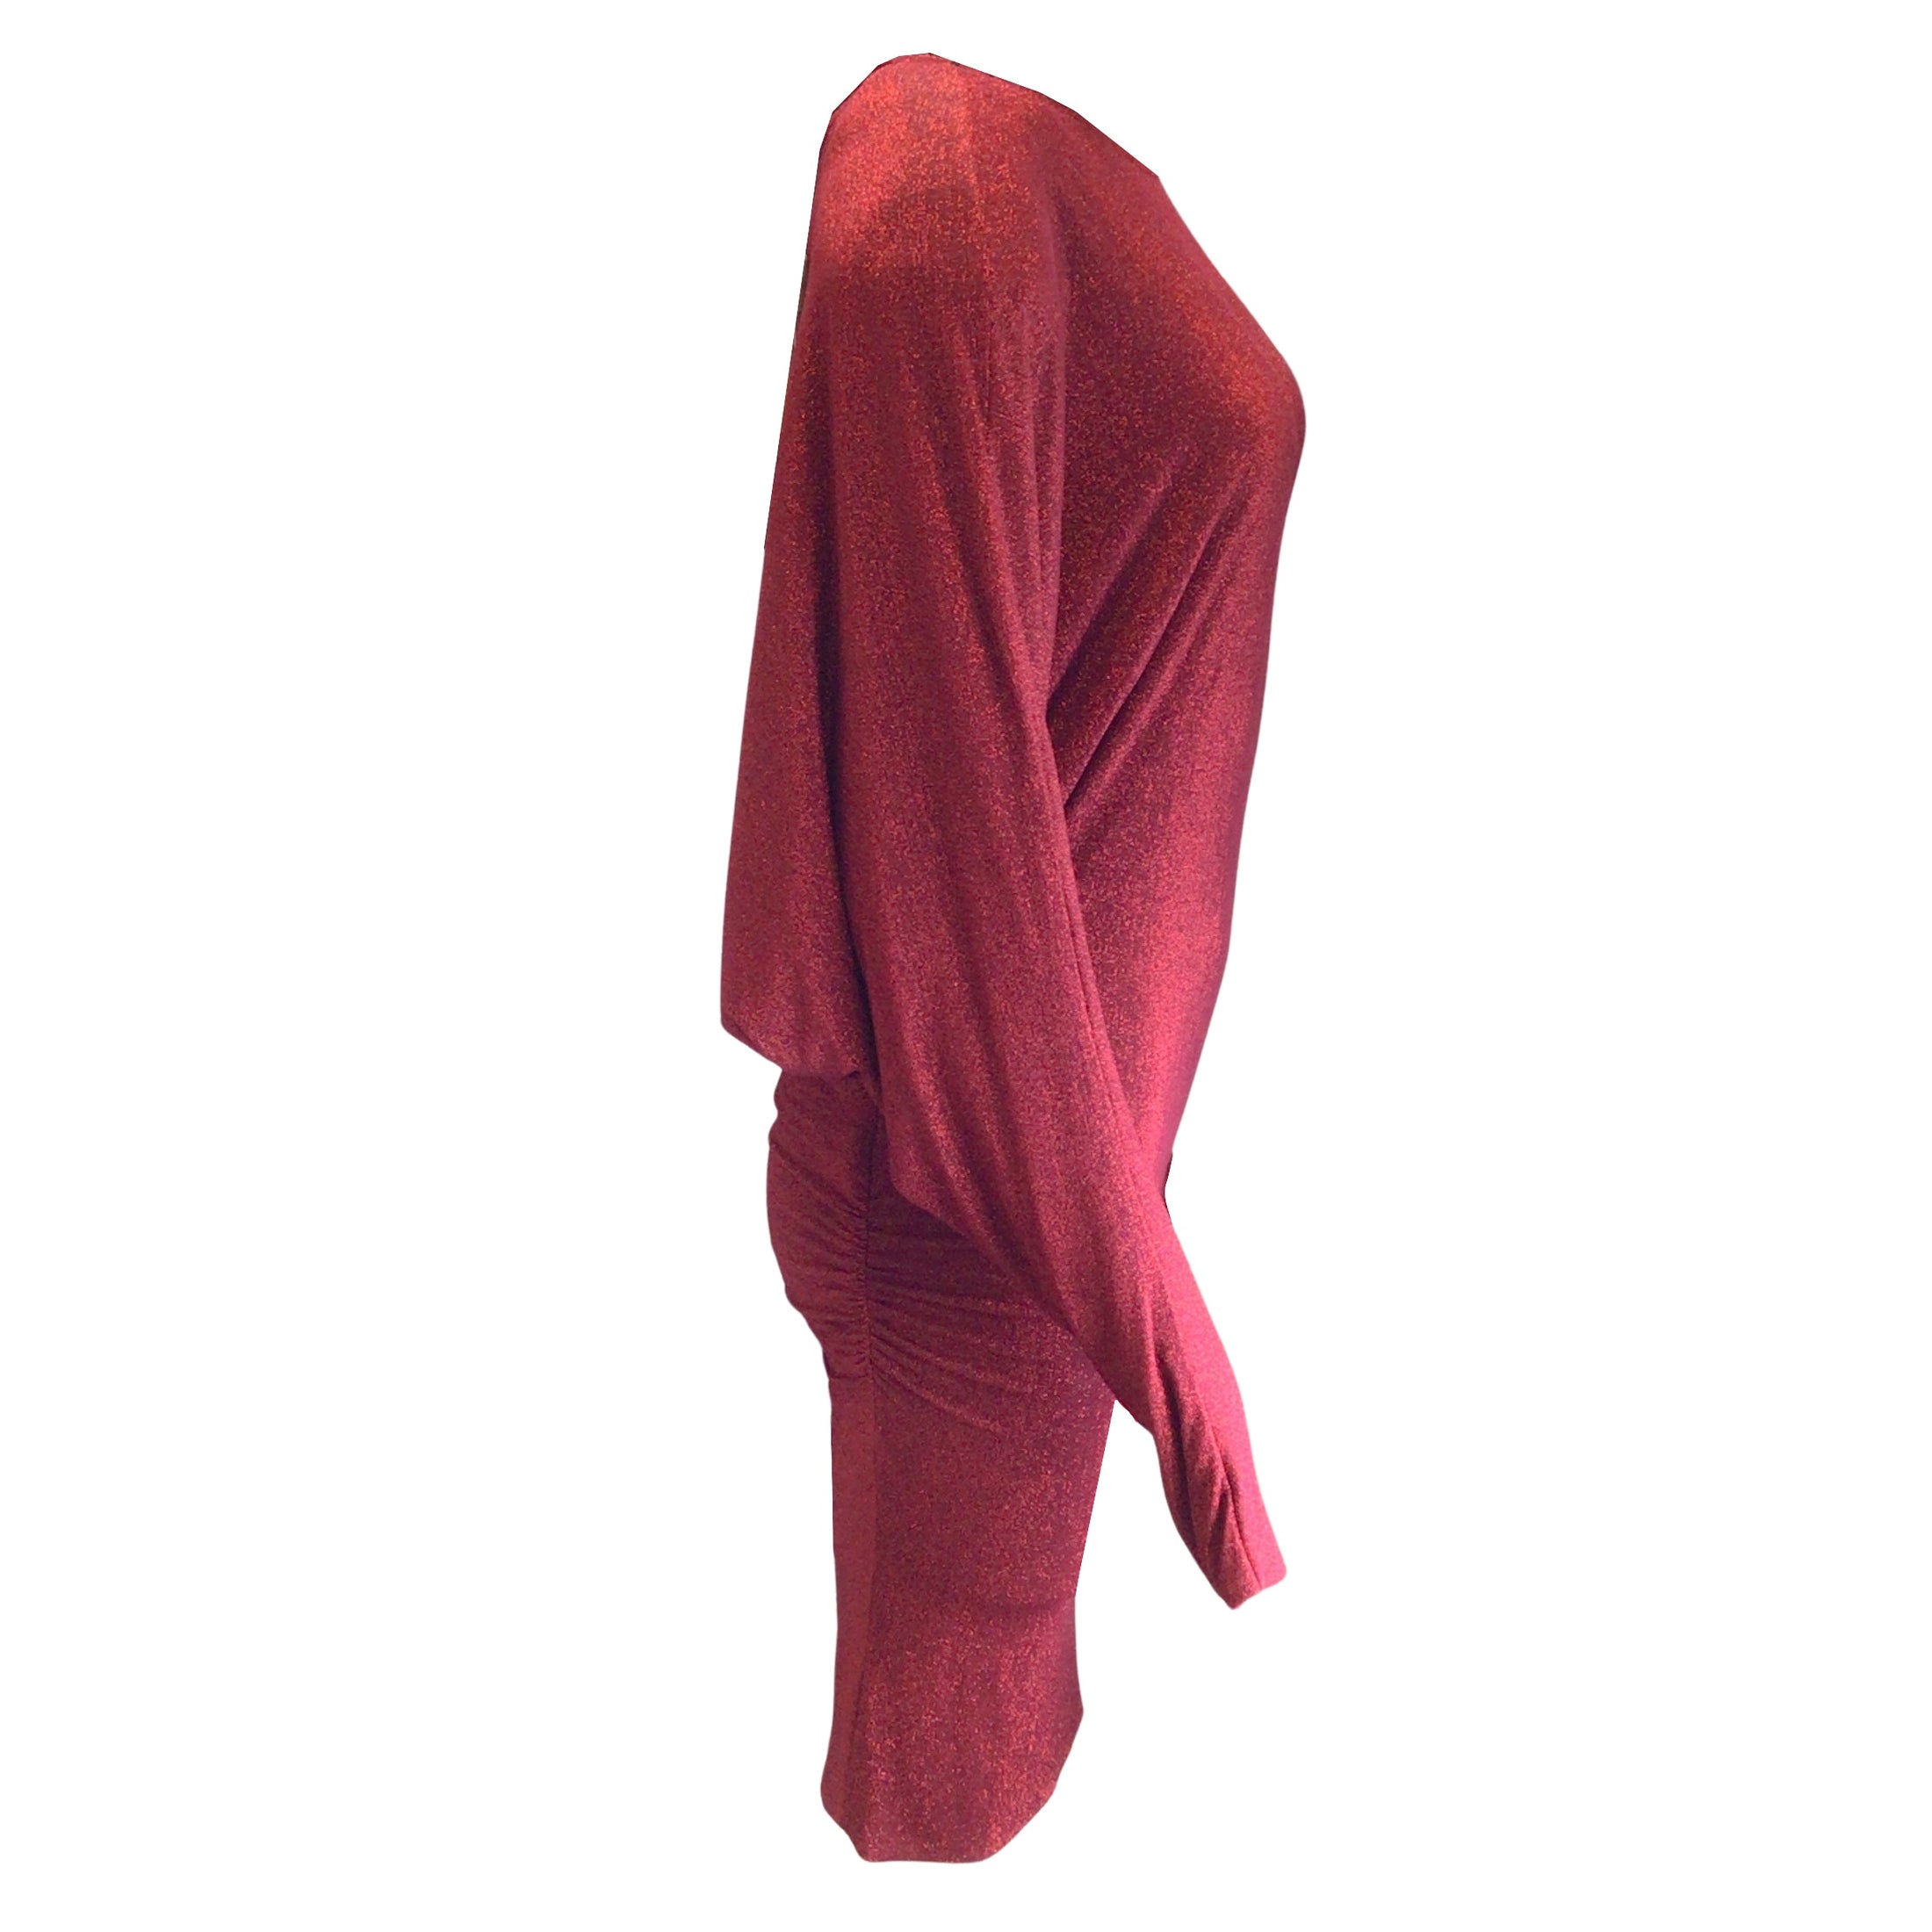 Alexandre Vauthier Red Metallic Glitter Shimmer Long Sleeved Stretchy Cocktail Dress